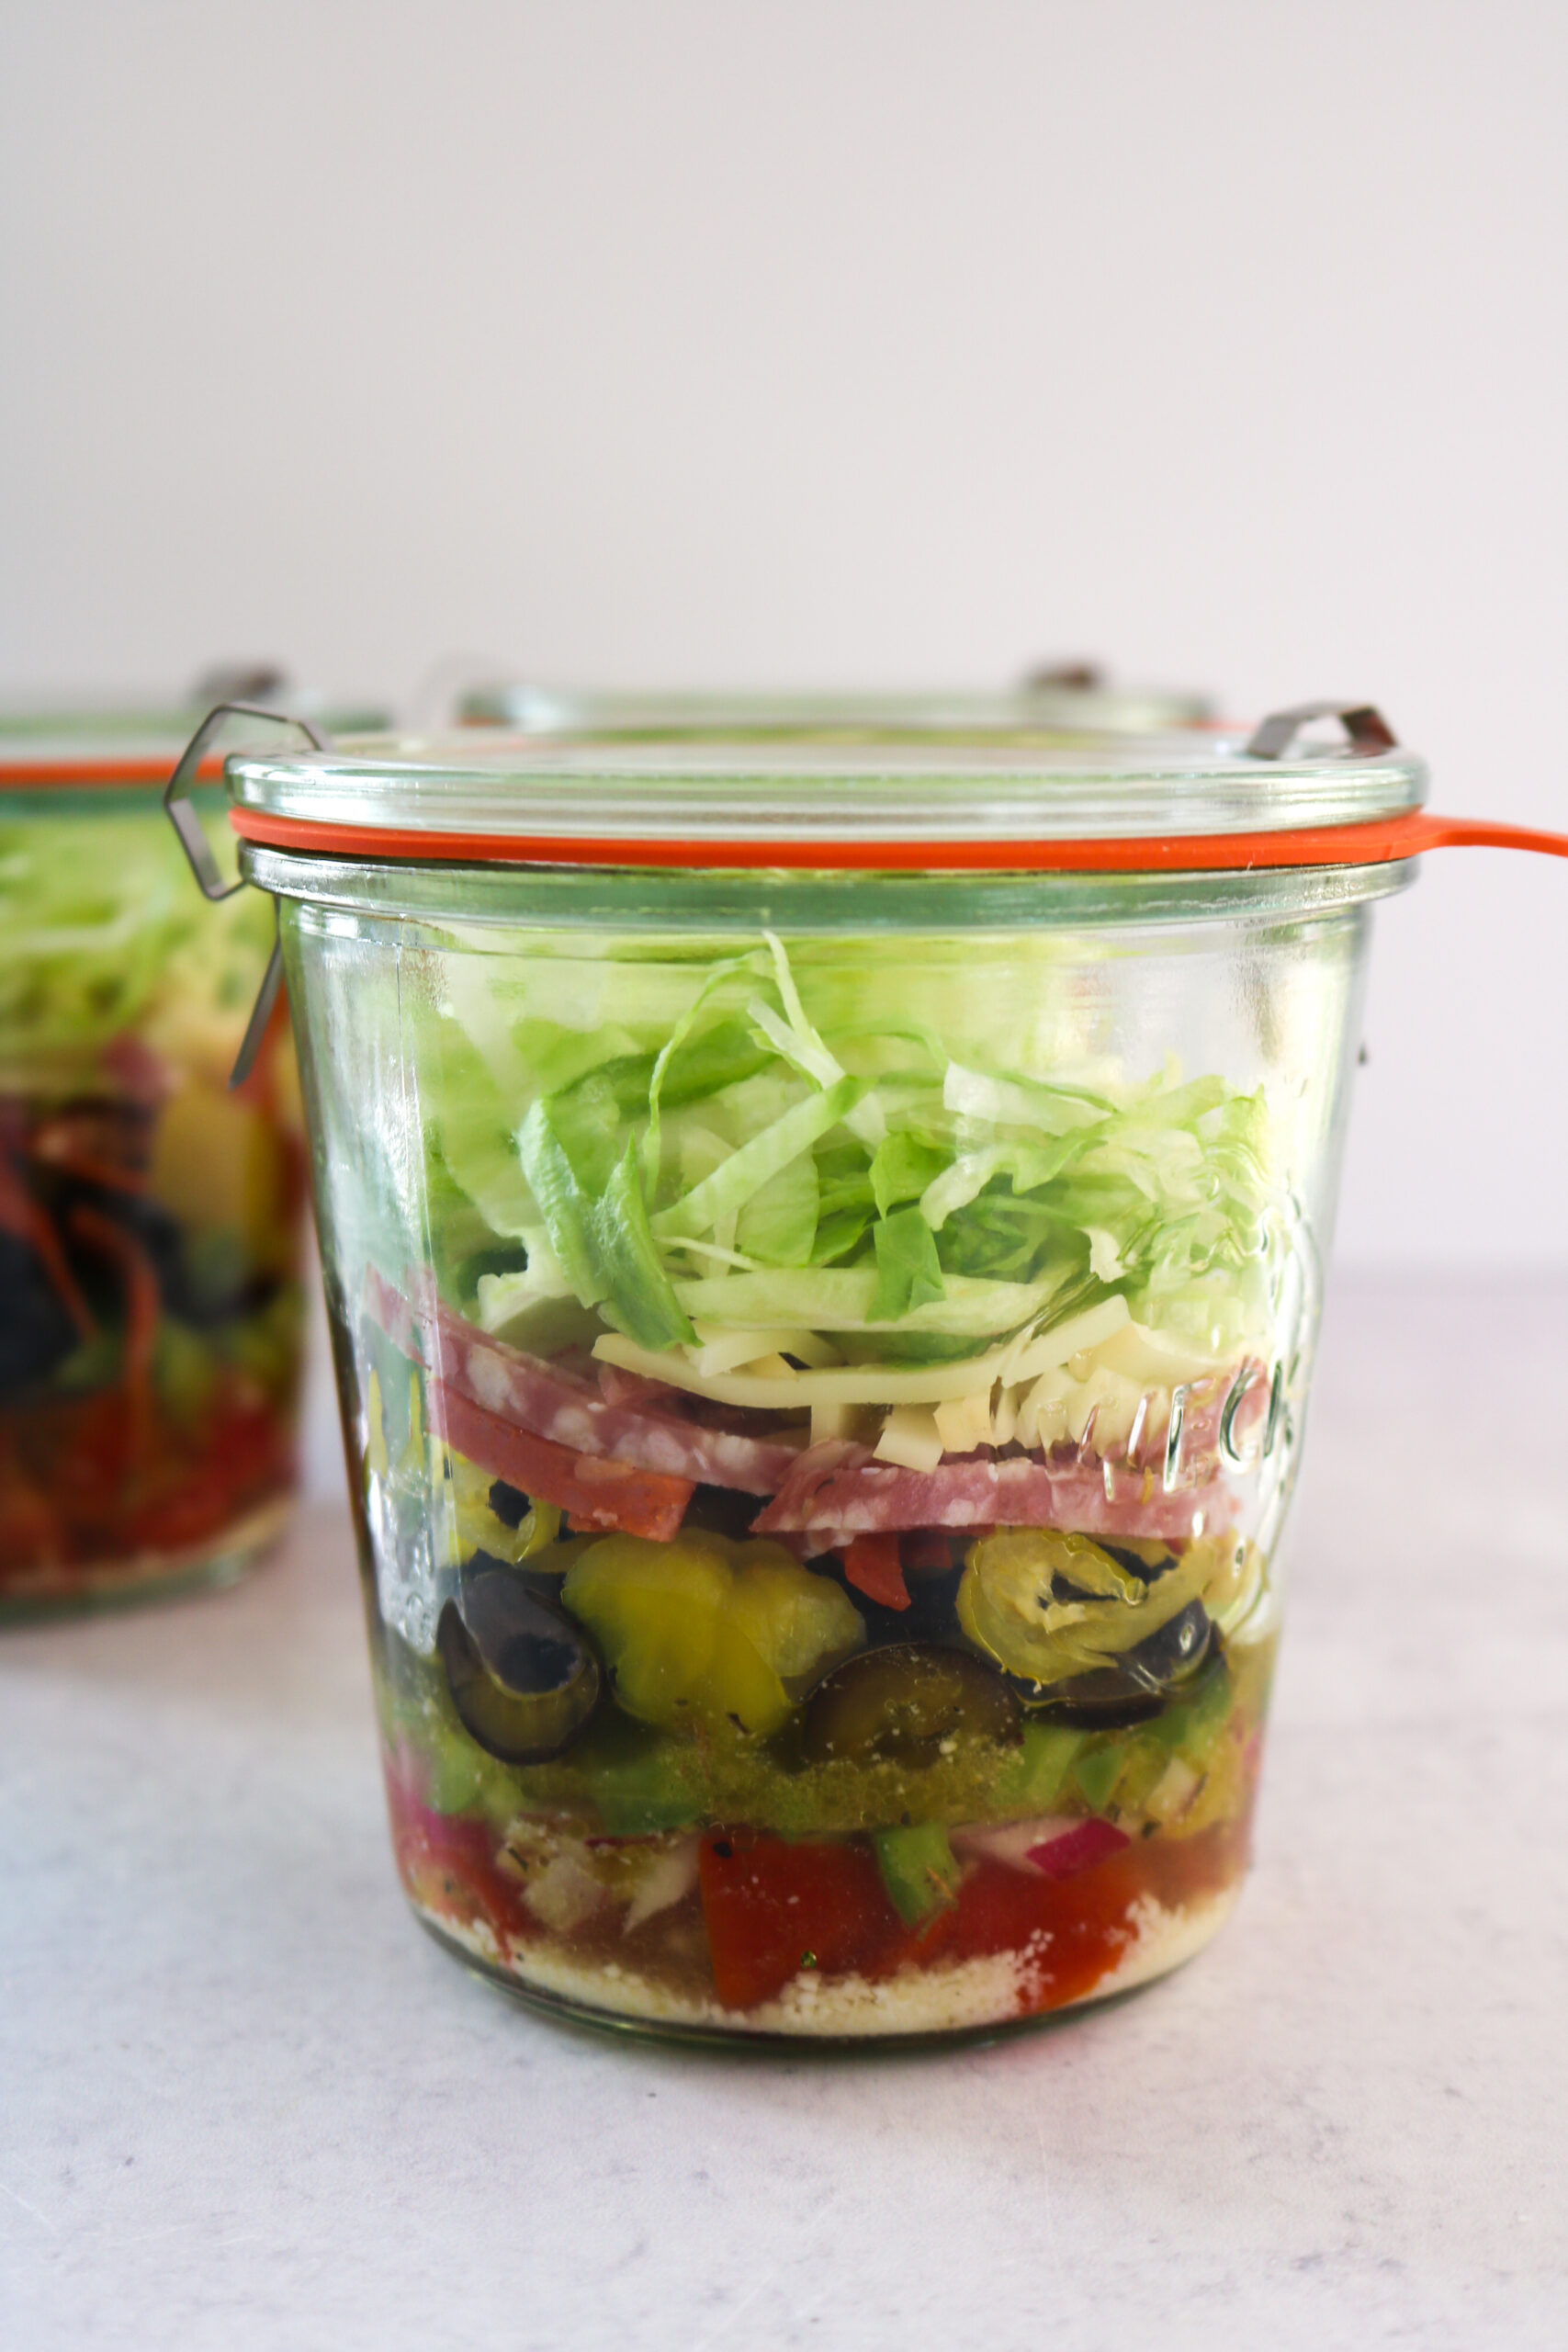 A Month of Mason Jar Salads! - The Seasoned Mom